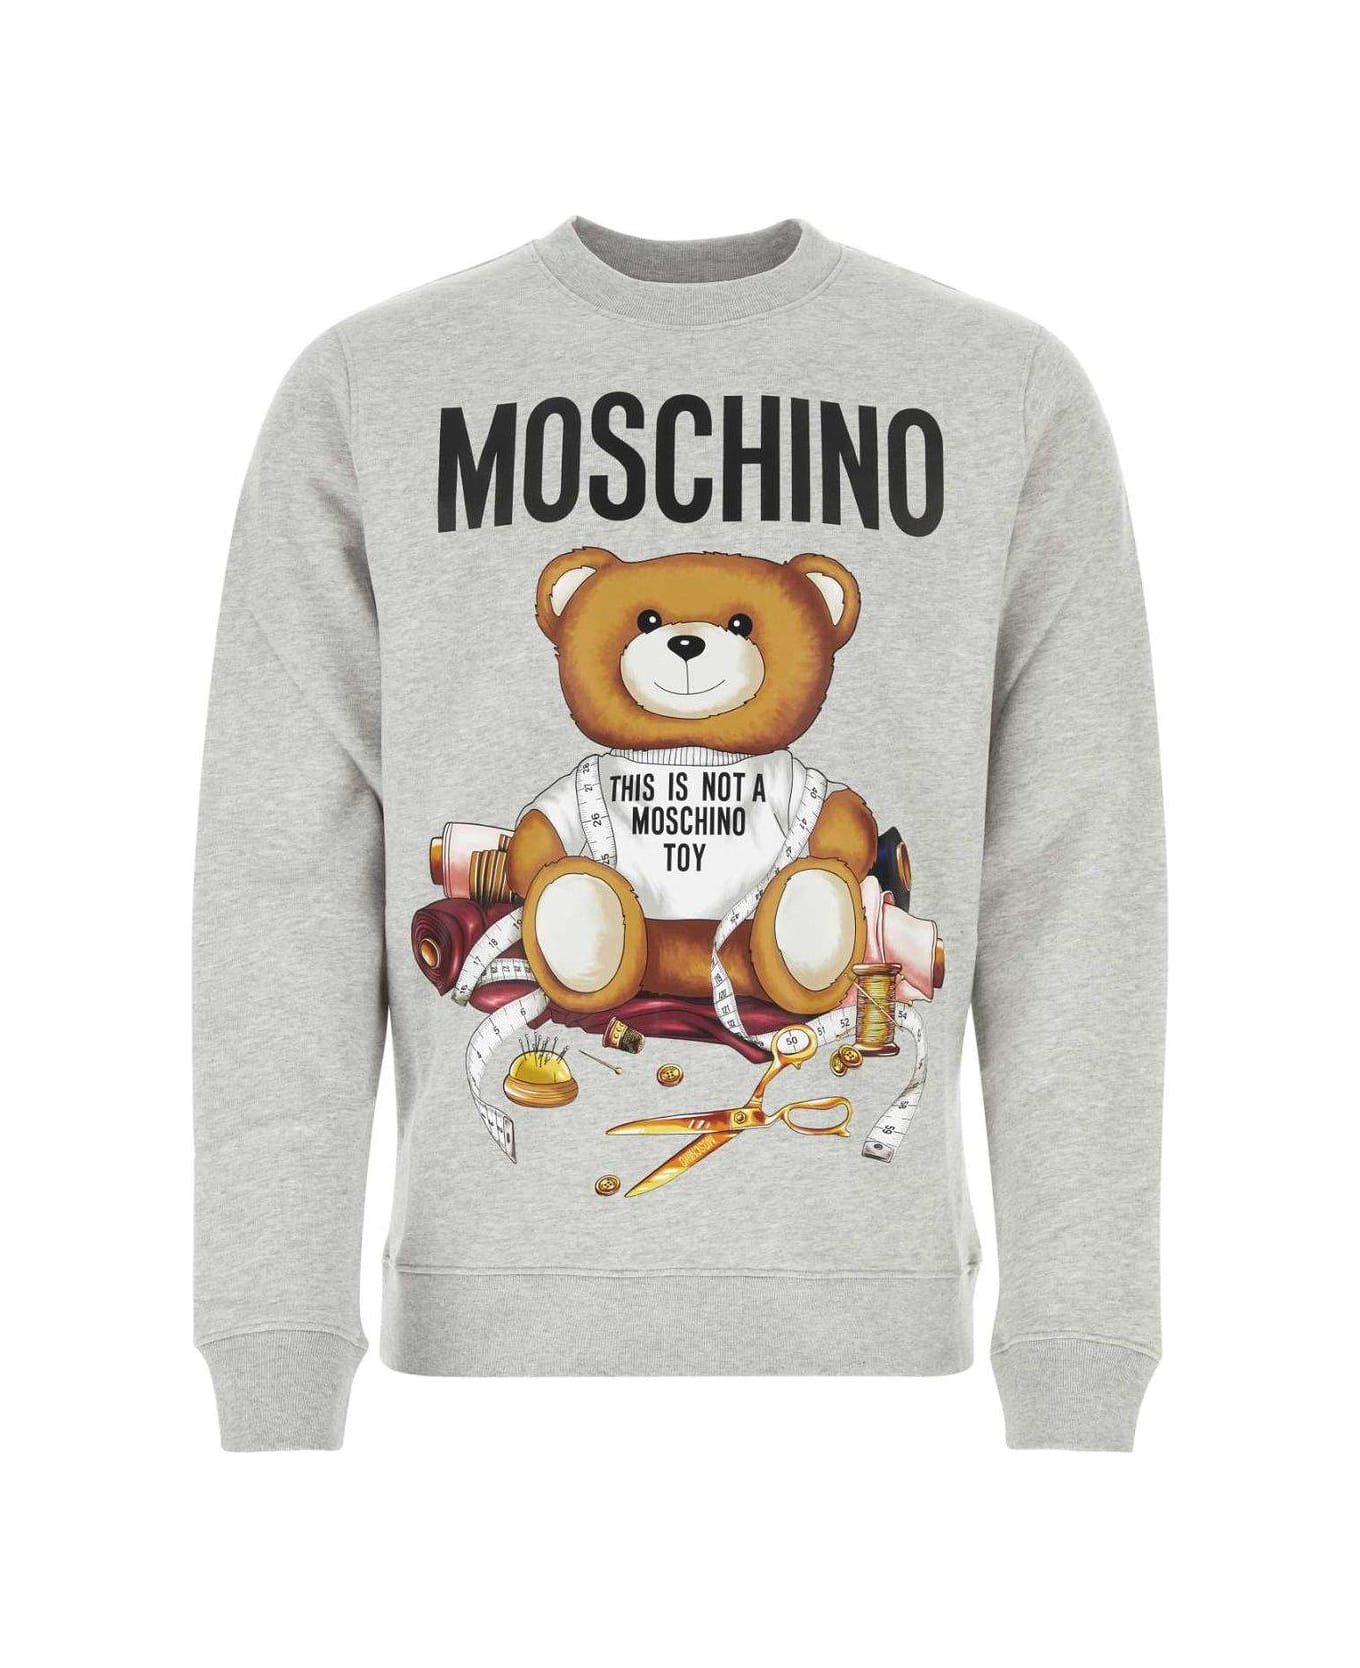 Moschino Teddy Bear Printed Crewneck Sweatshirt - 1485